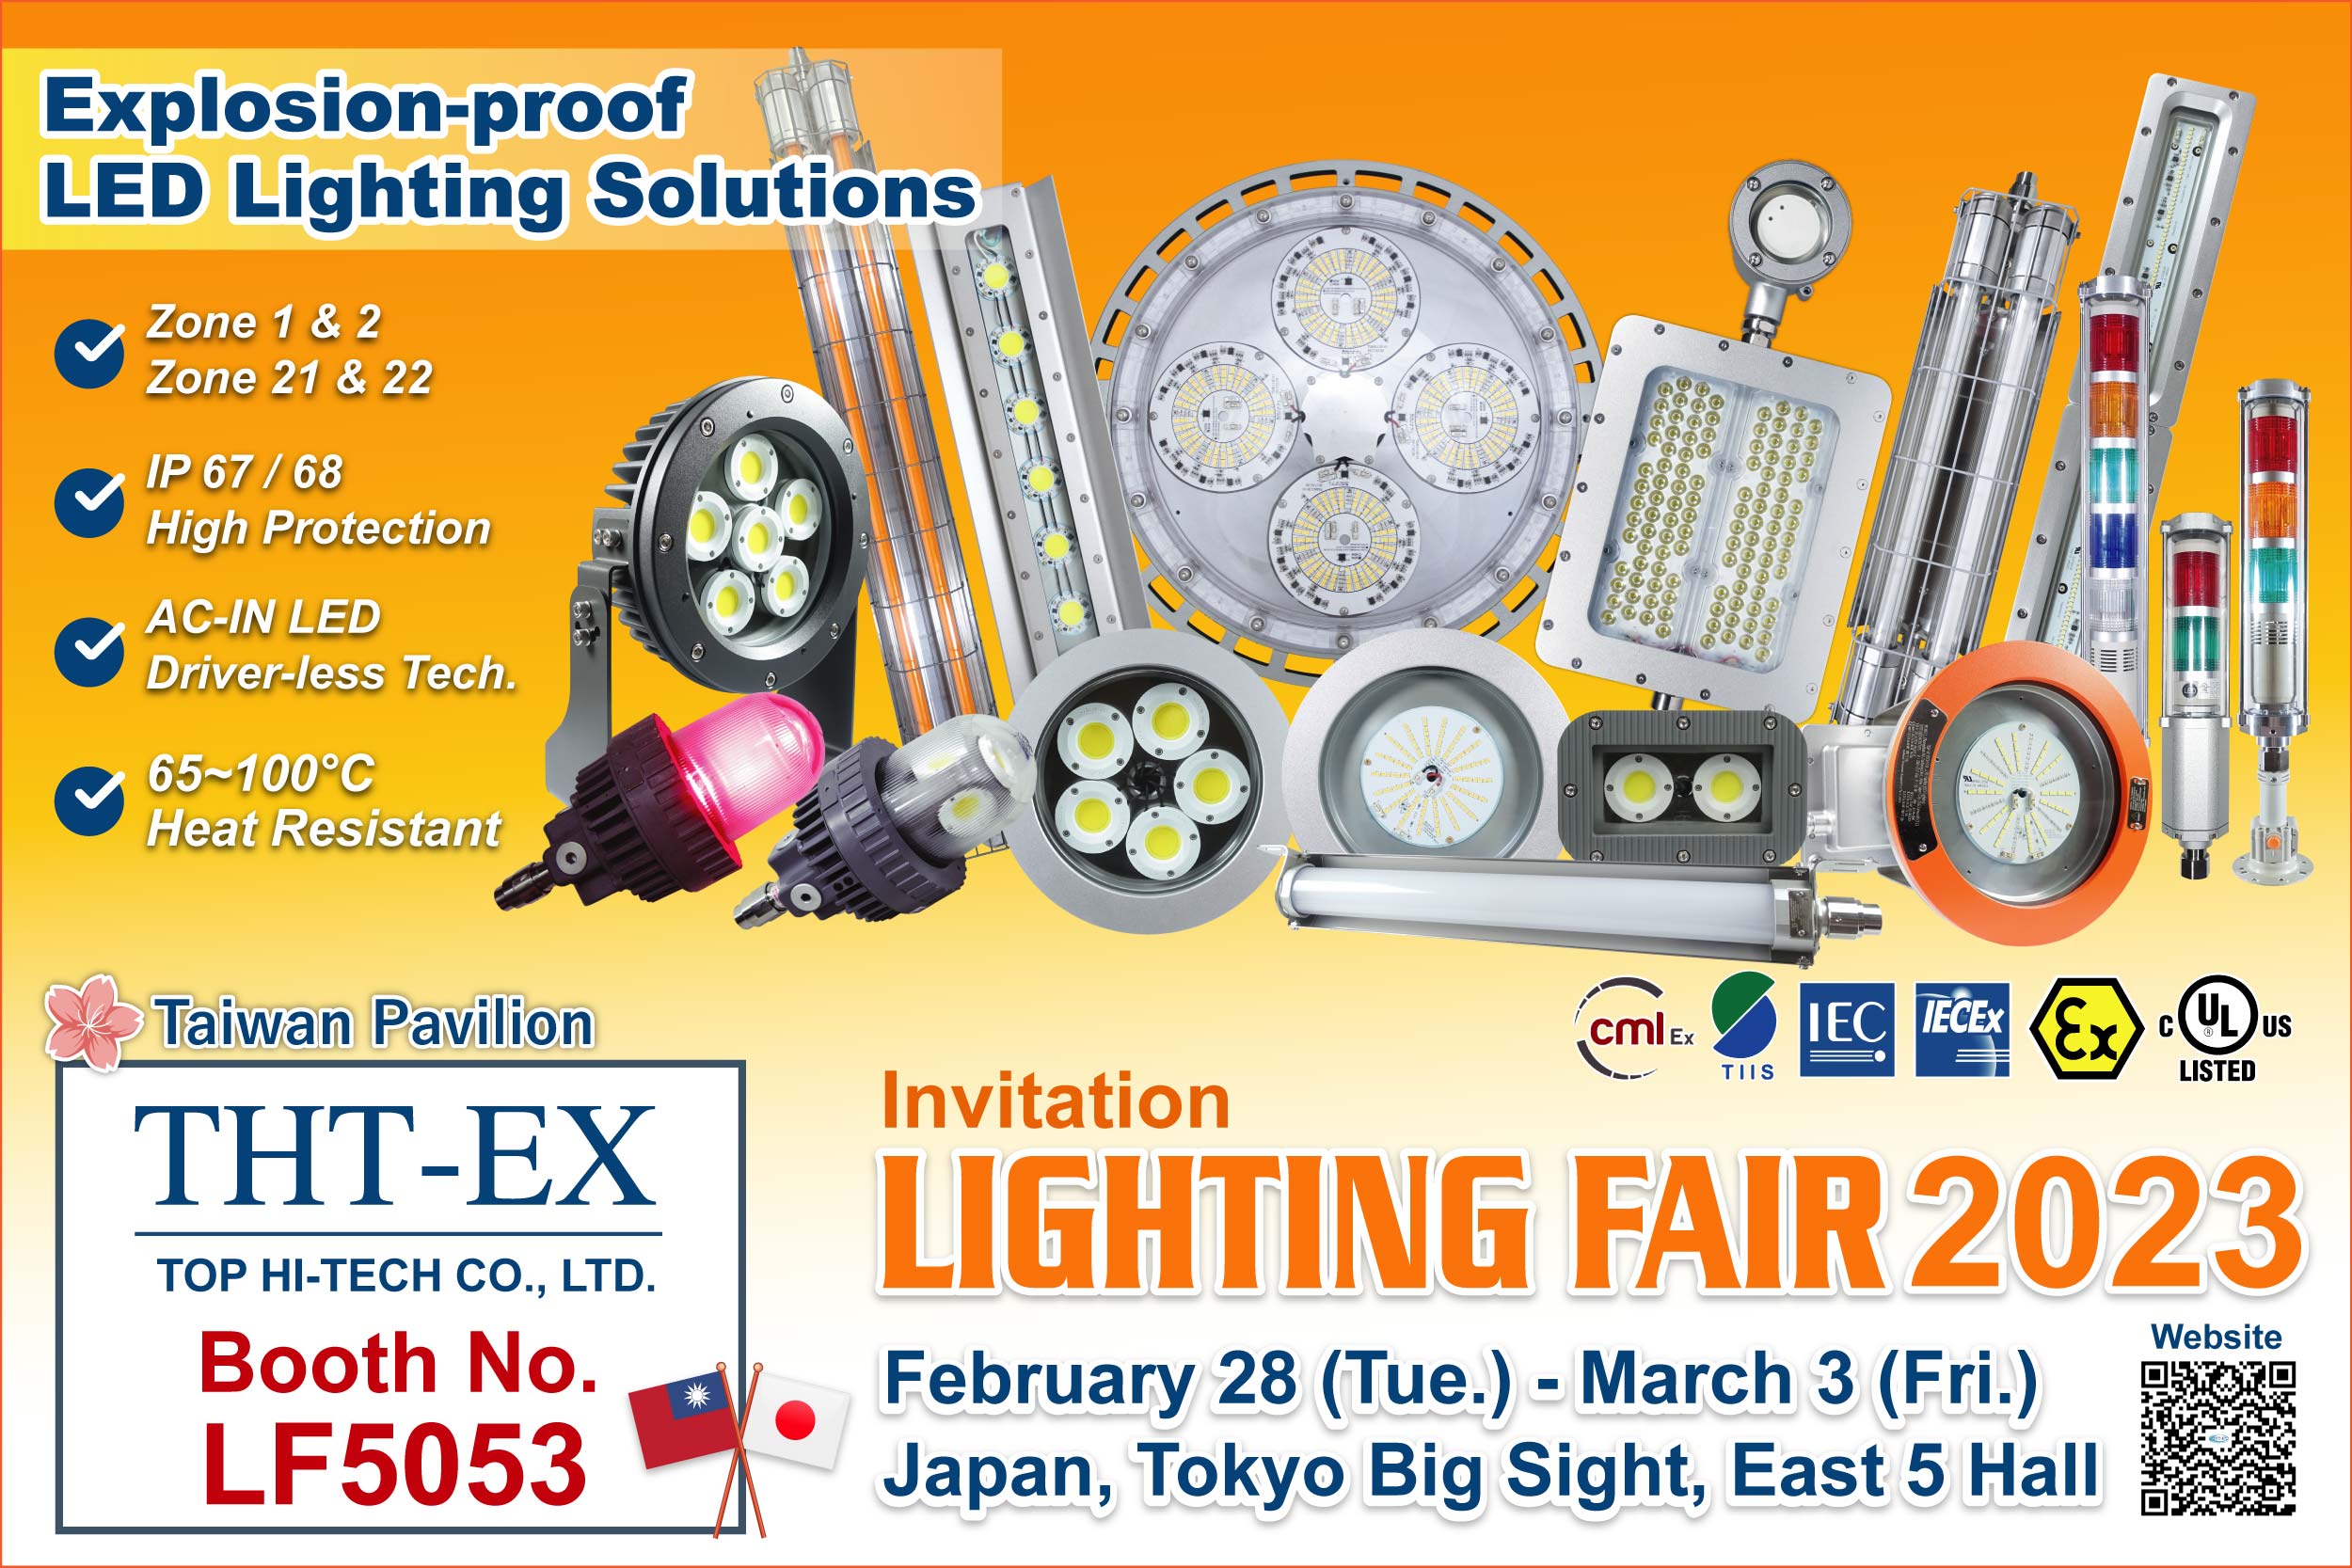 【Invitation】Tokyo Lighting Fair 2023, Japan